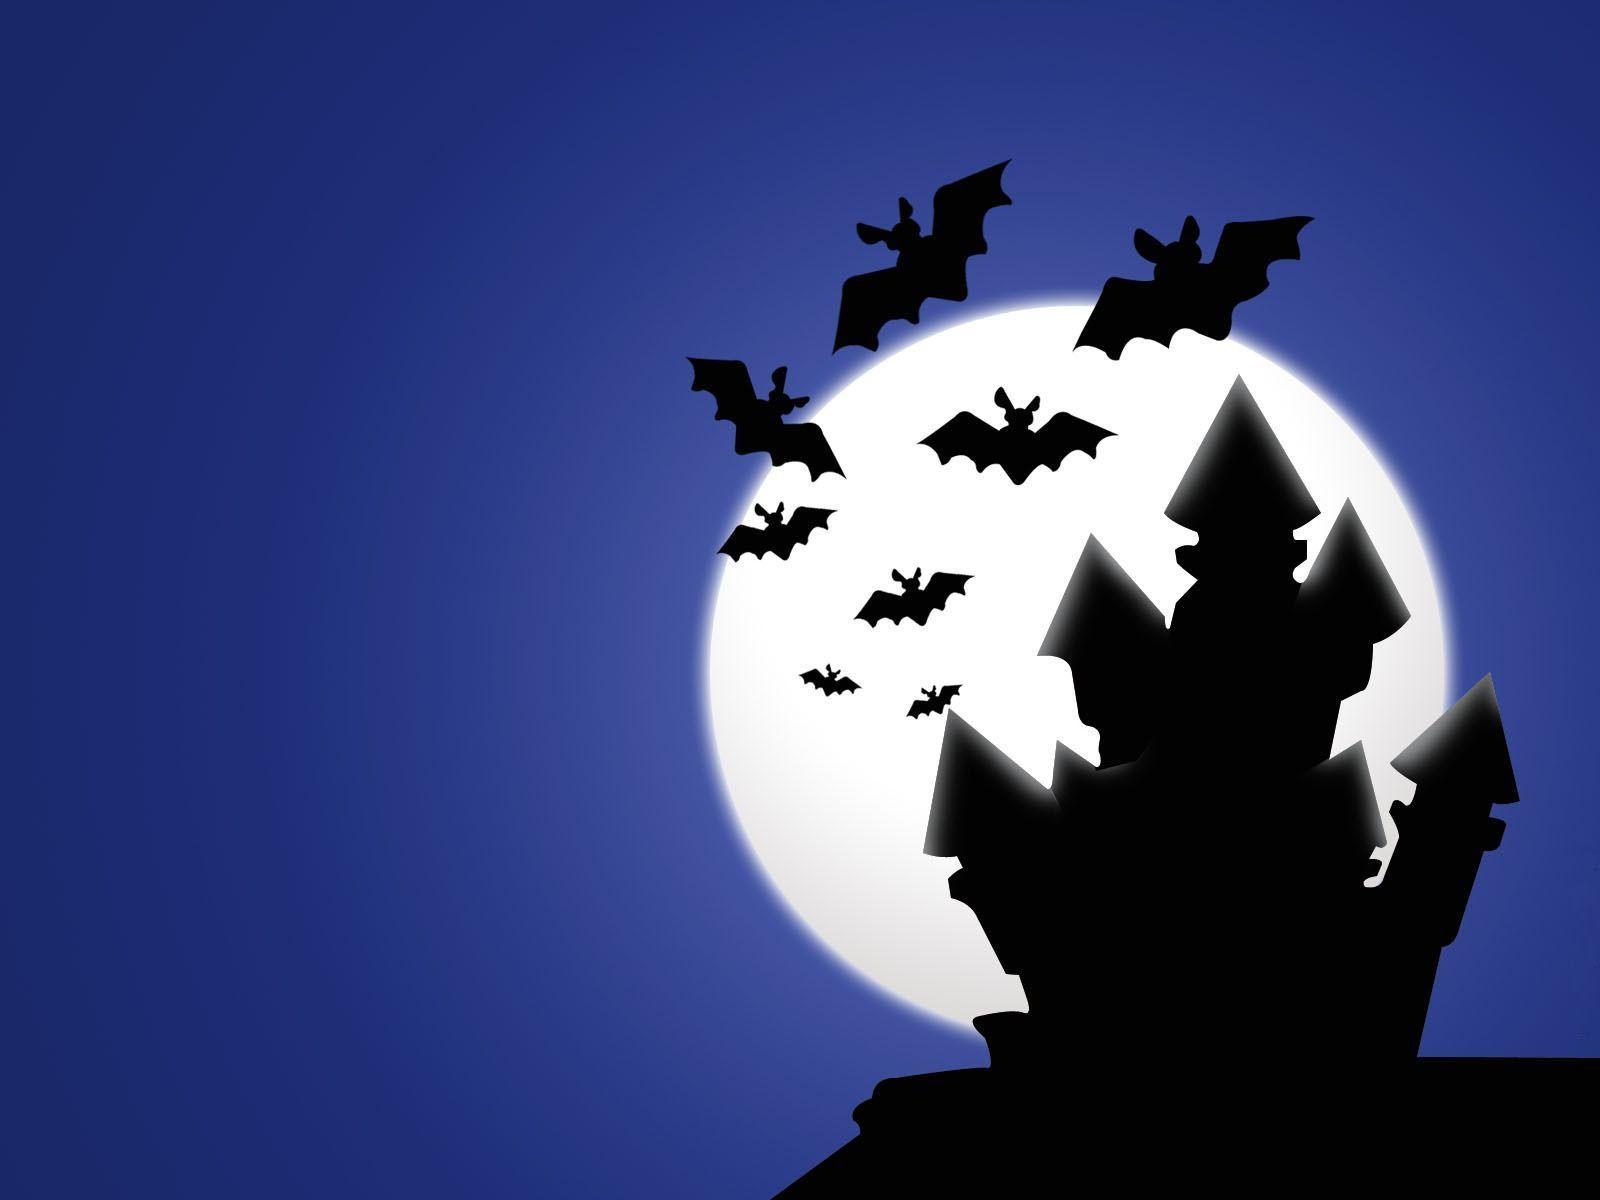 Scary Halloween Wallpaper Web Upd8: Ubuntu / Linux blog